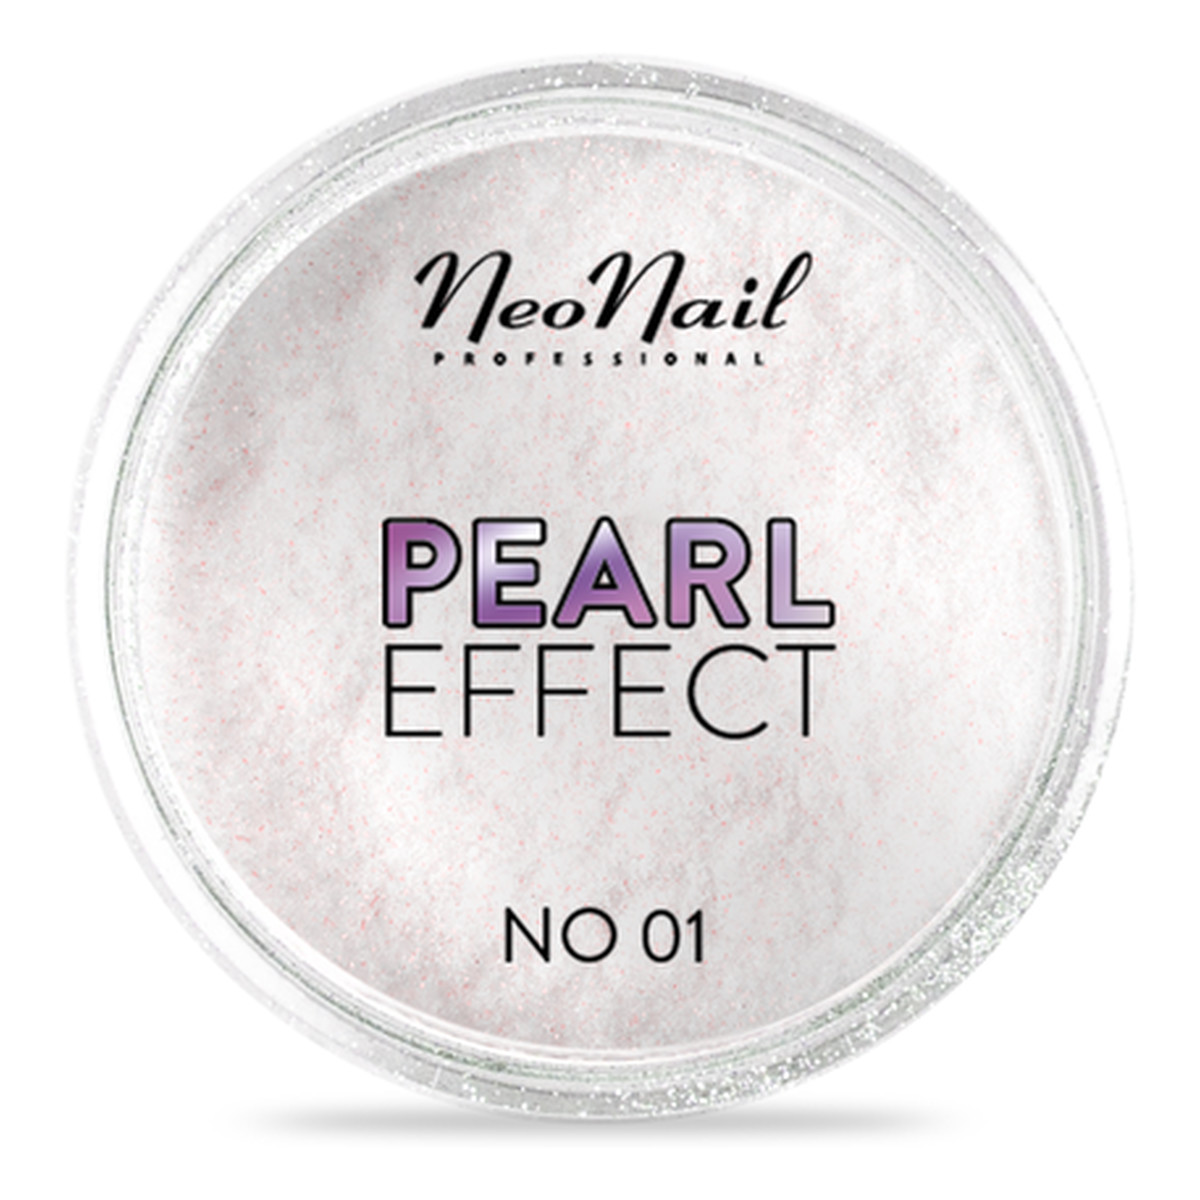 NeoNail Pearl Effect pyłek do zdobienia paznokci